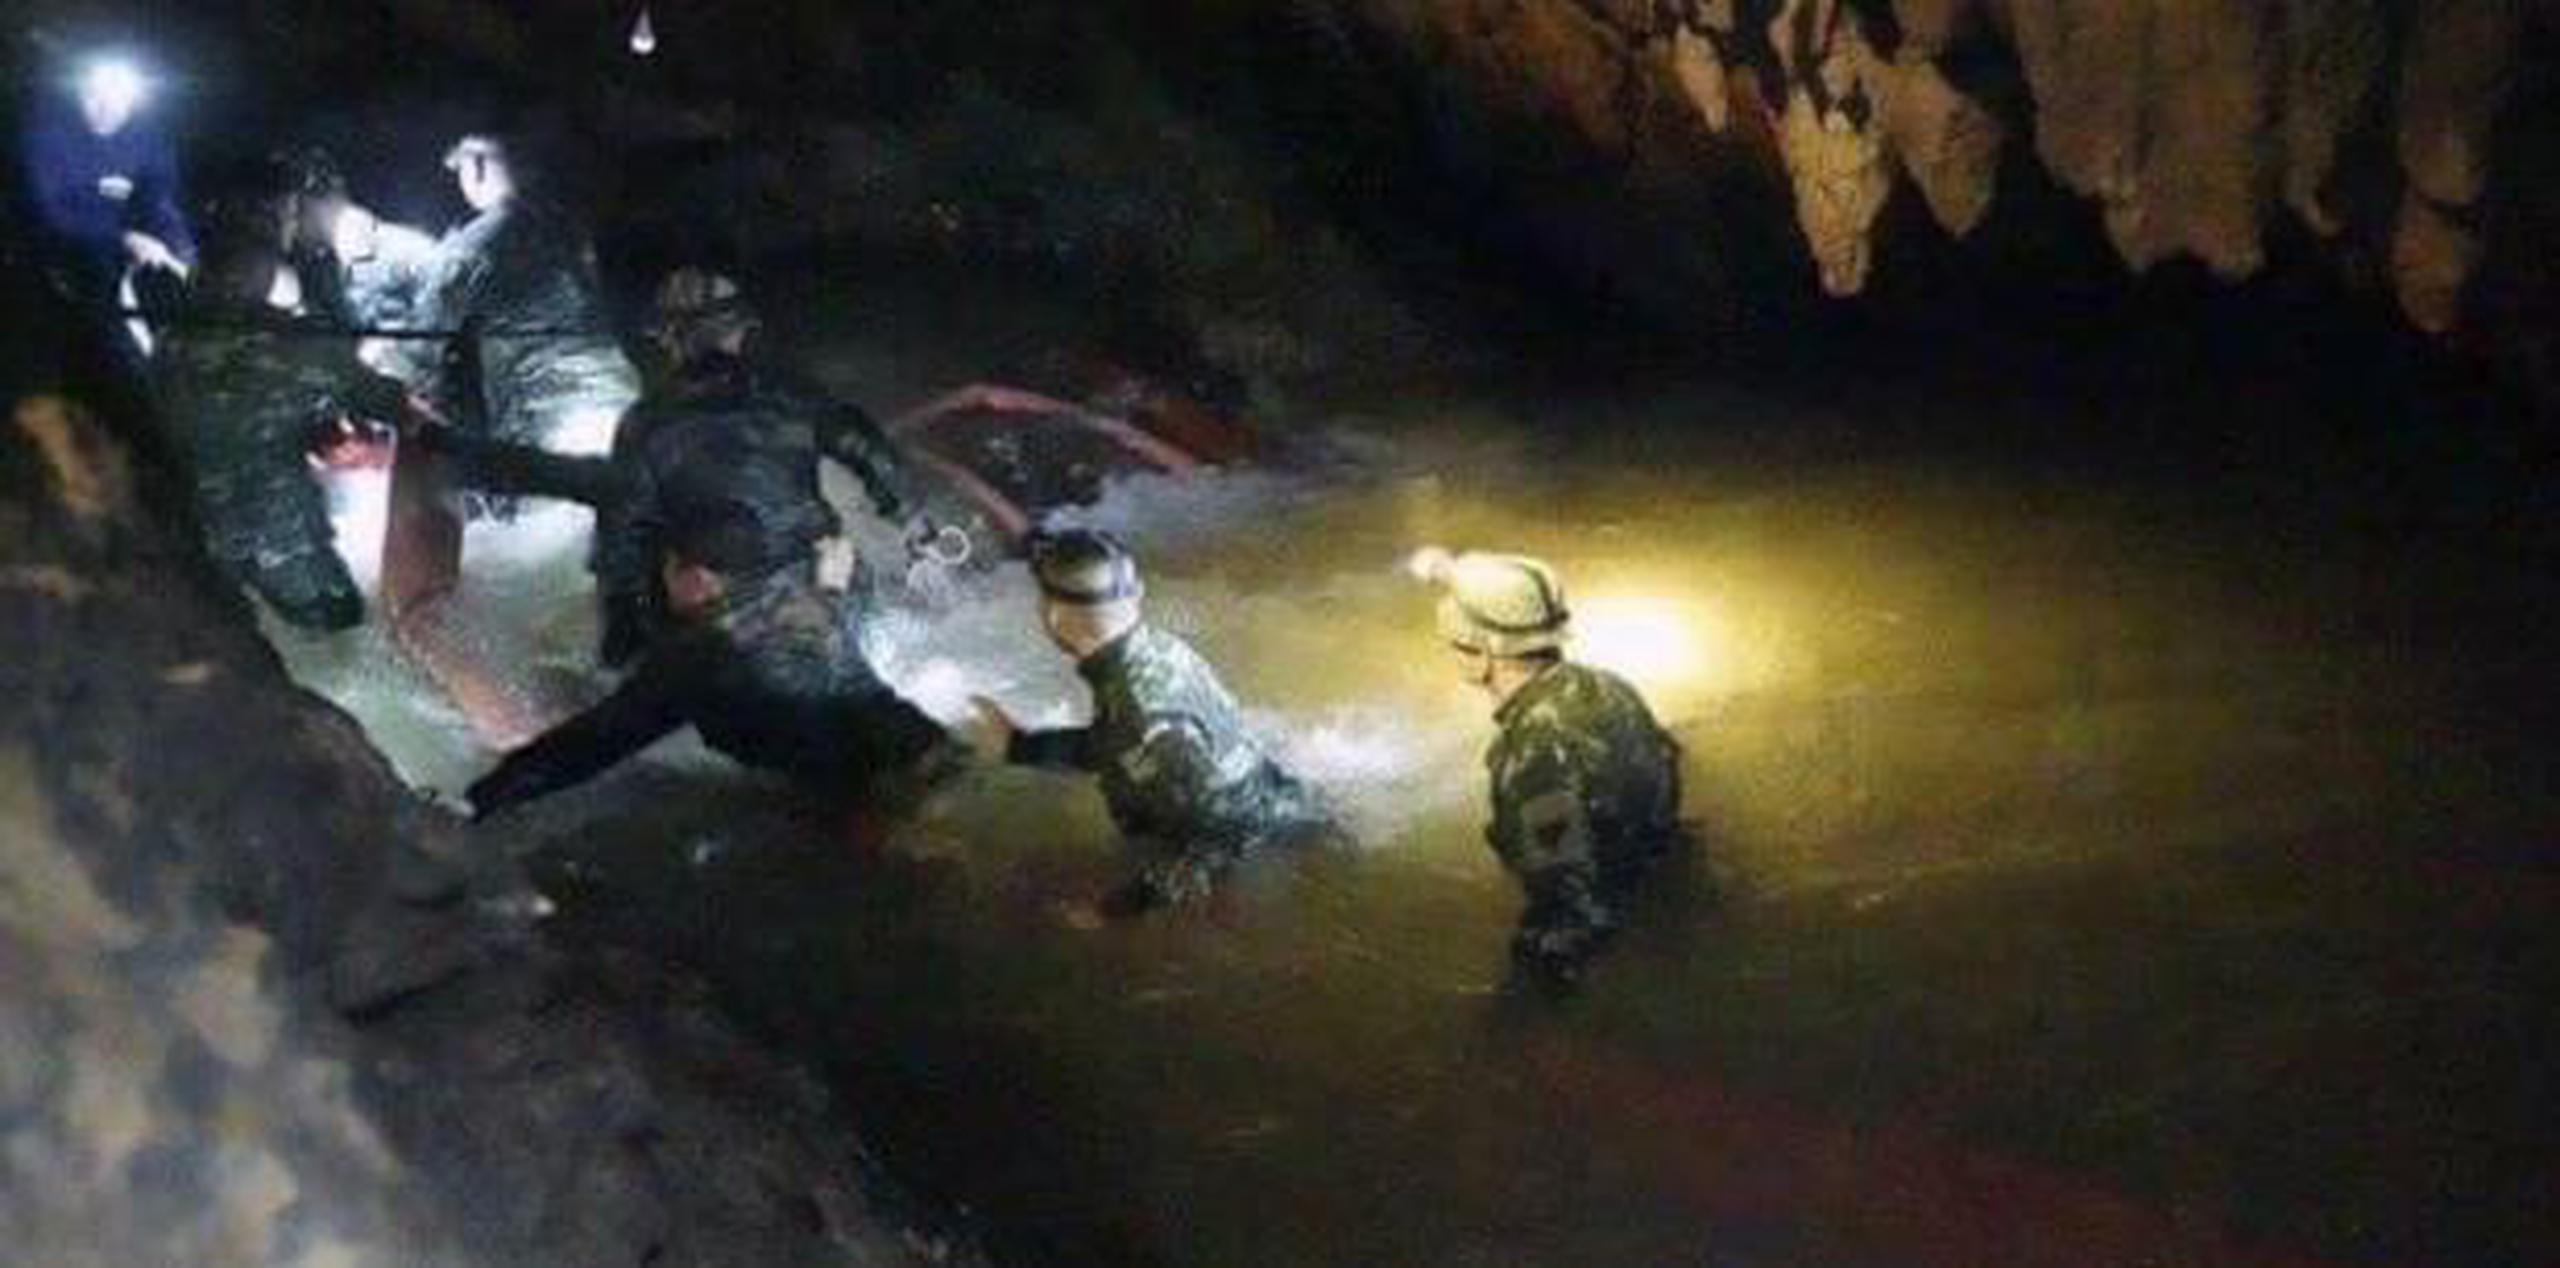 Las autoridades tratan de bombear el agua de la caverna inundada. (Tham Luang Rescue Operation Center via AP)